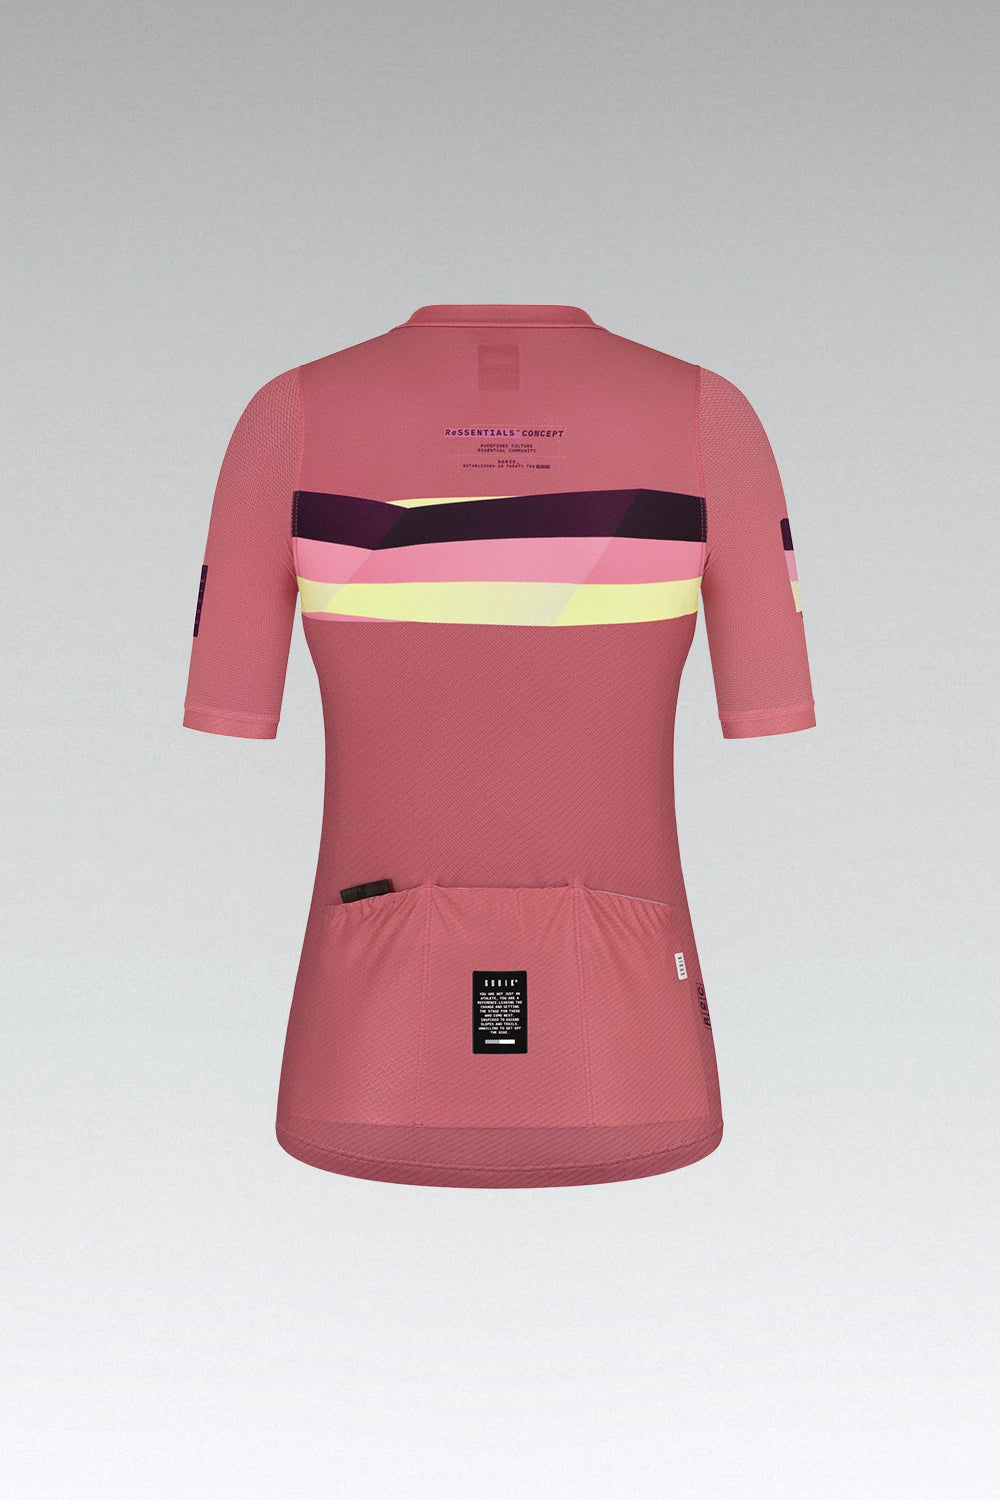 Maillot Race Pink Line de mujer, perfecto para rutas invernales - Engobe